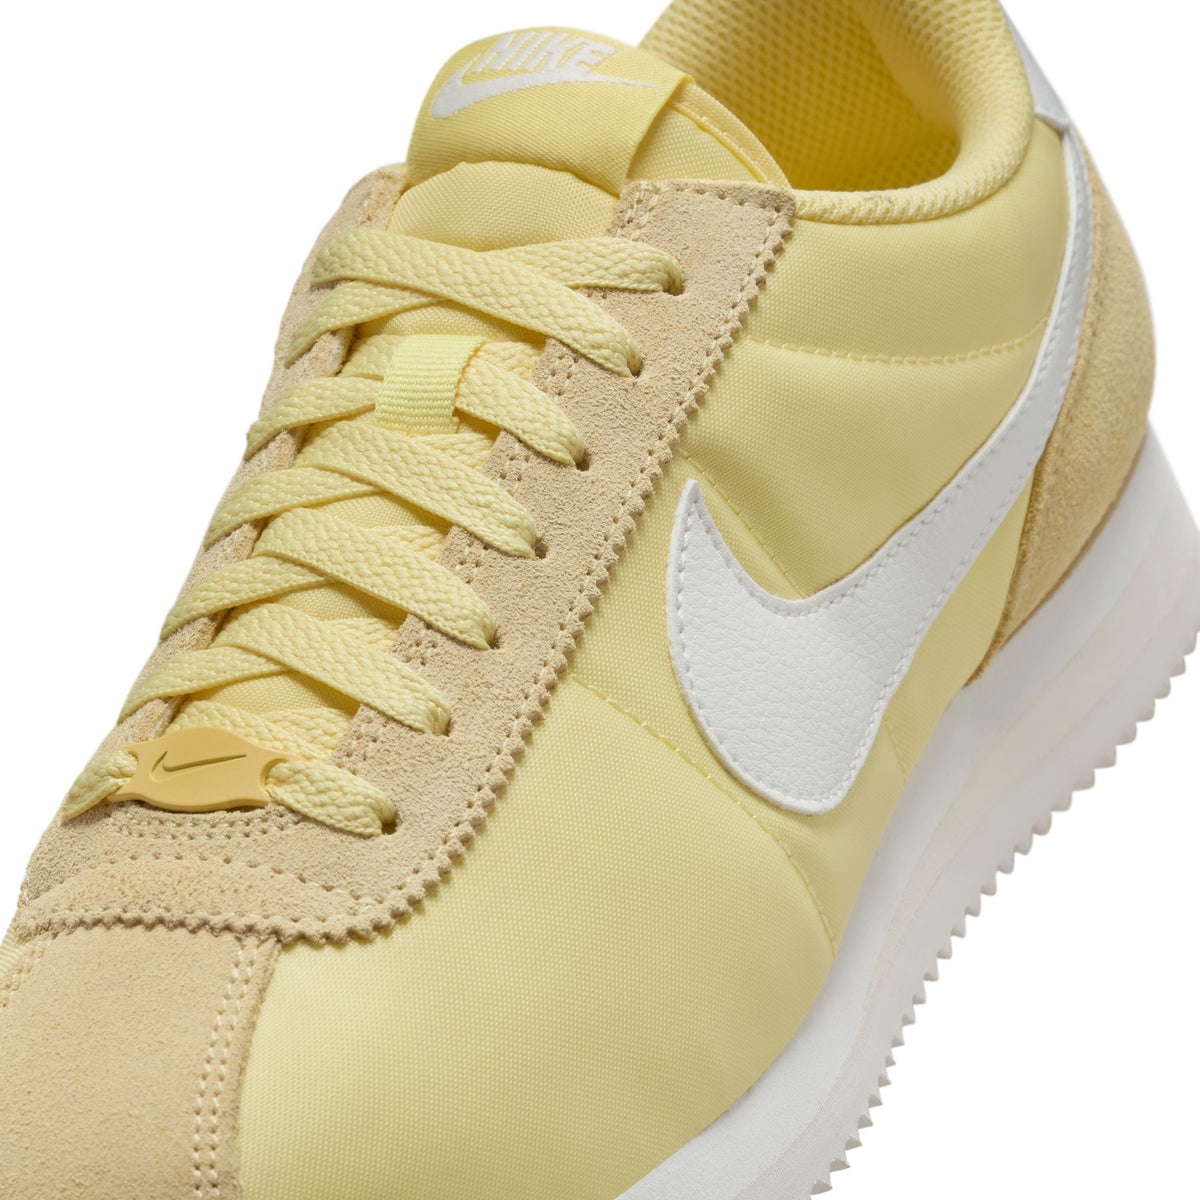 WMNS Nike Cortez TXT "Soft Yellow"